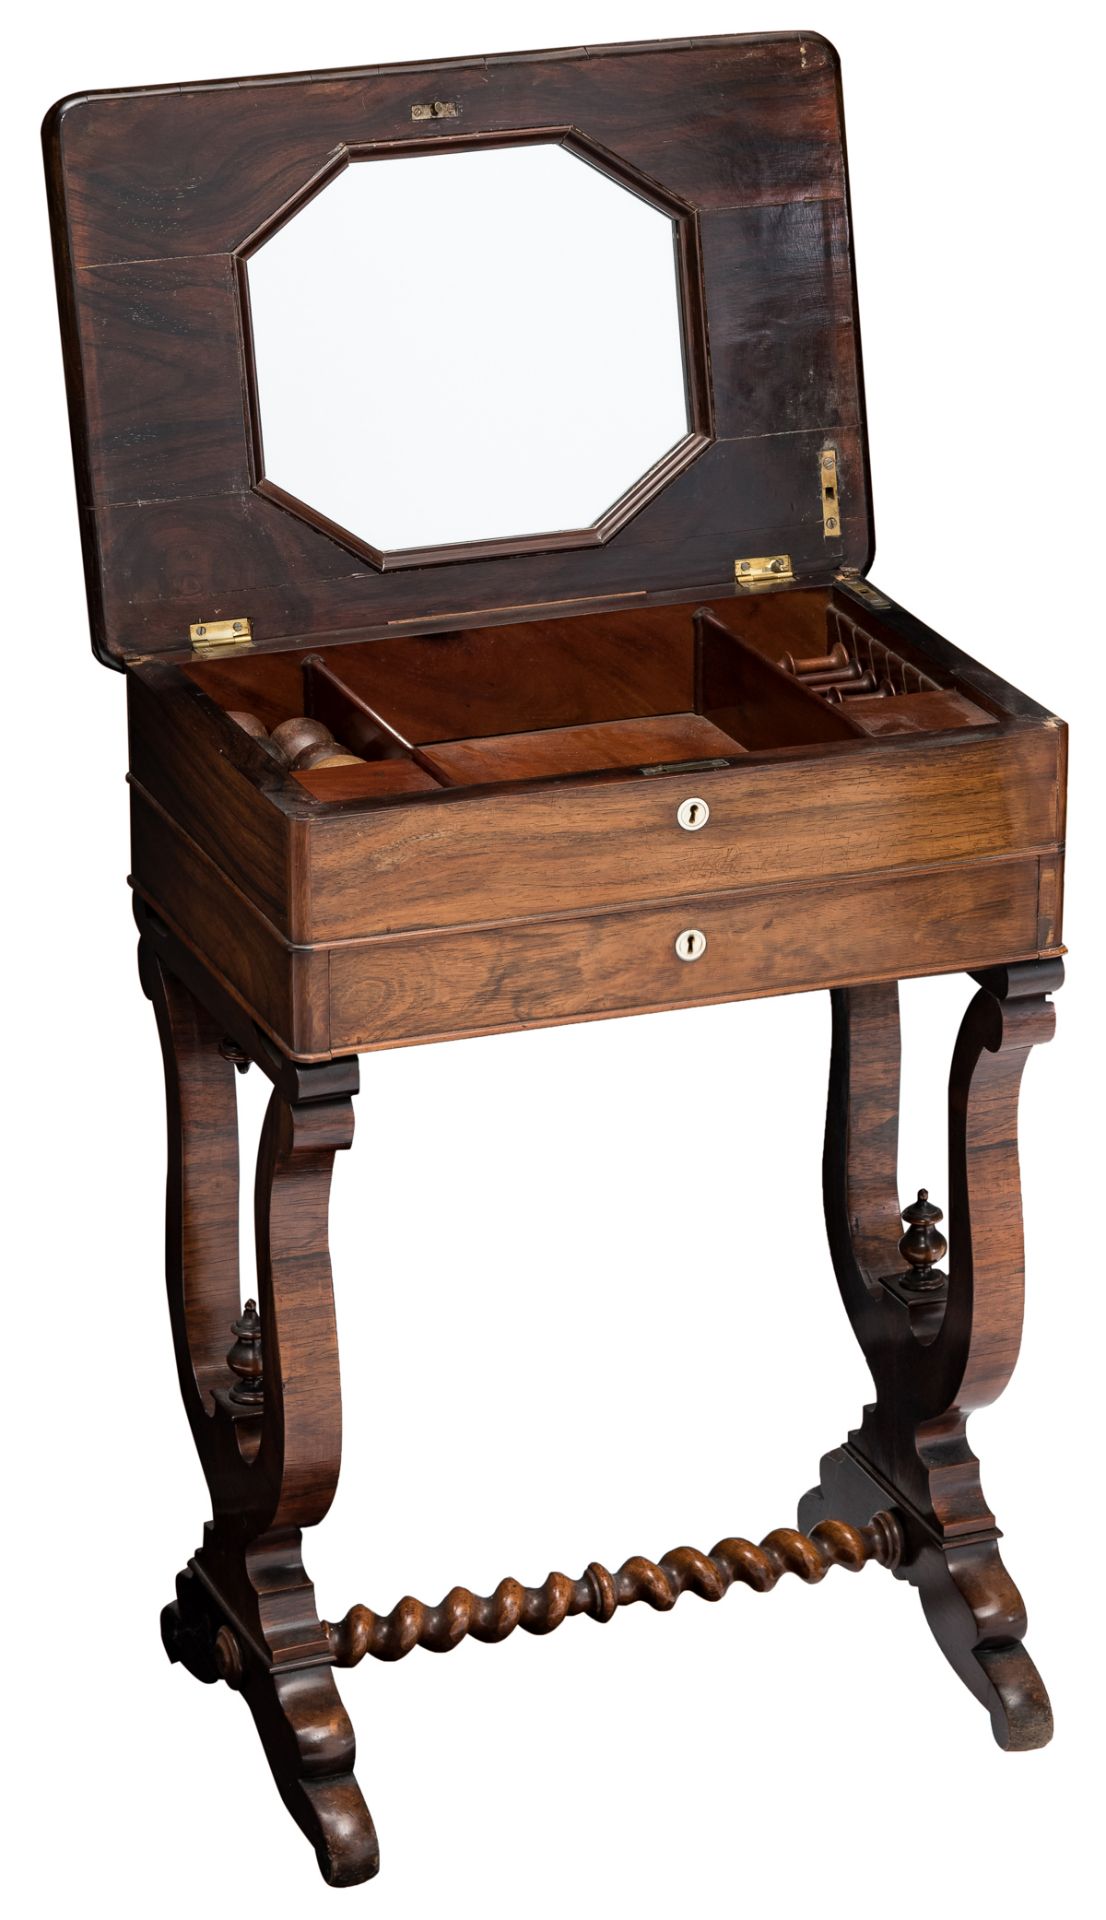 A rosewood veneered Biedermeier lady's needle working table, with bone escutcheons, inside the top w